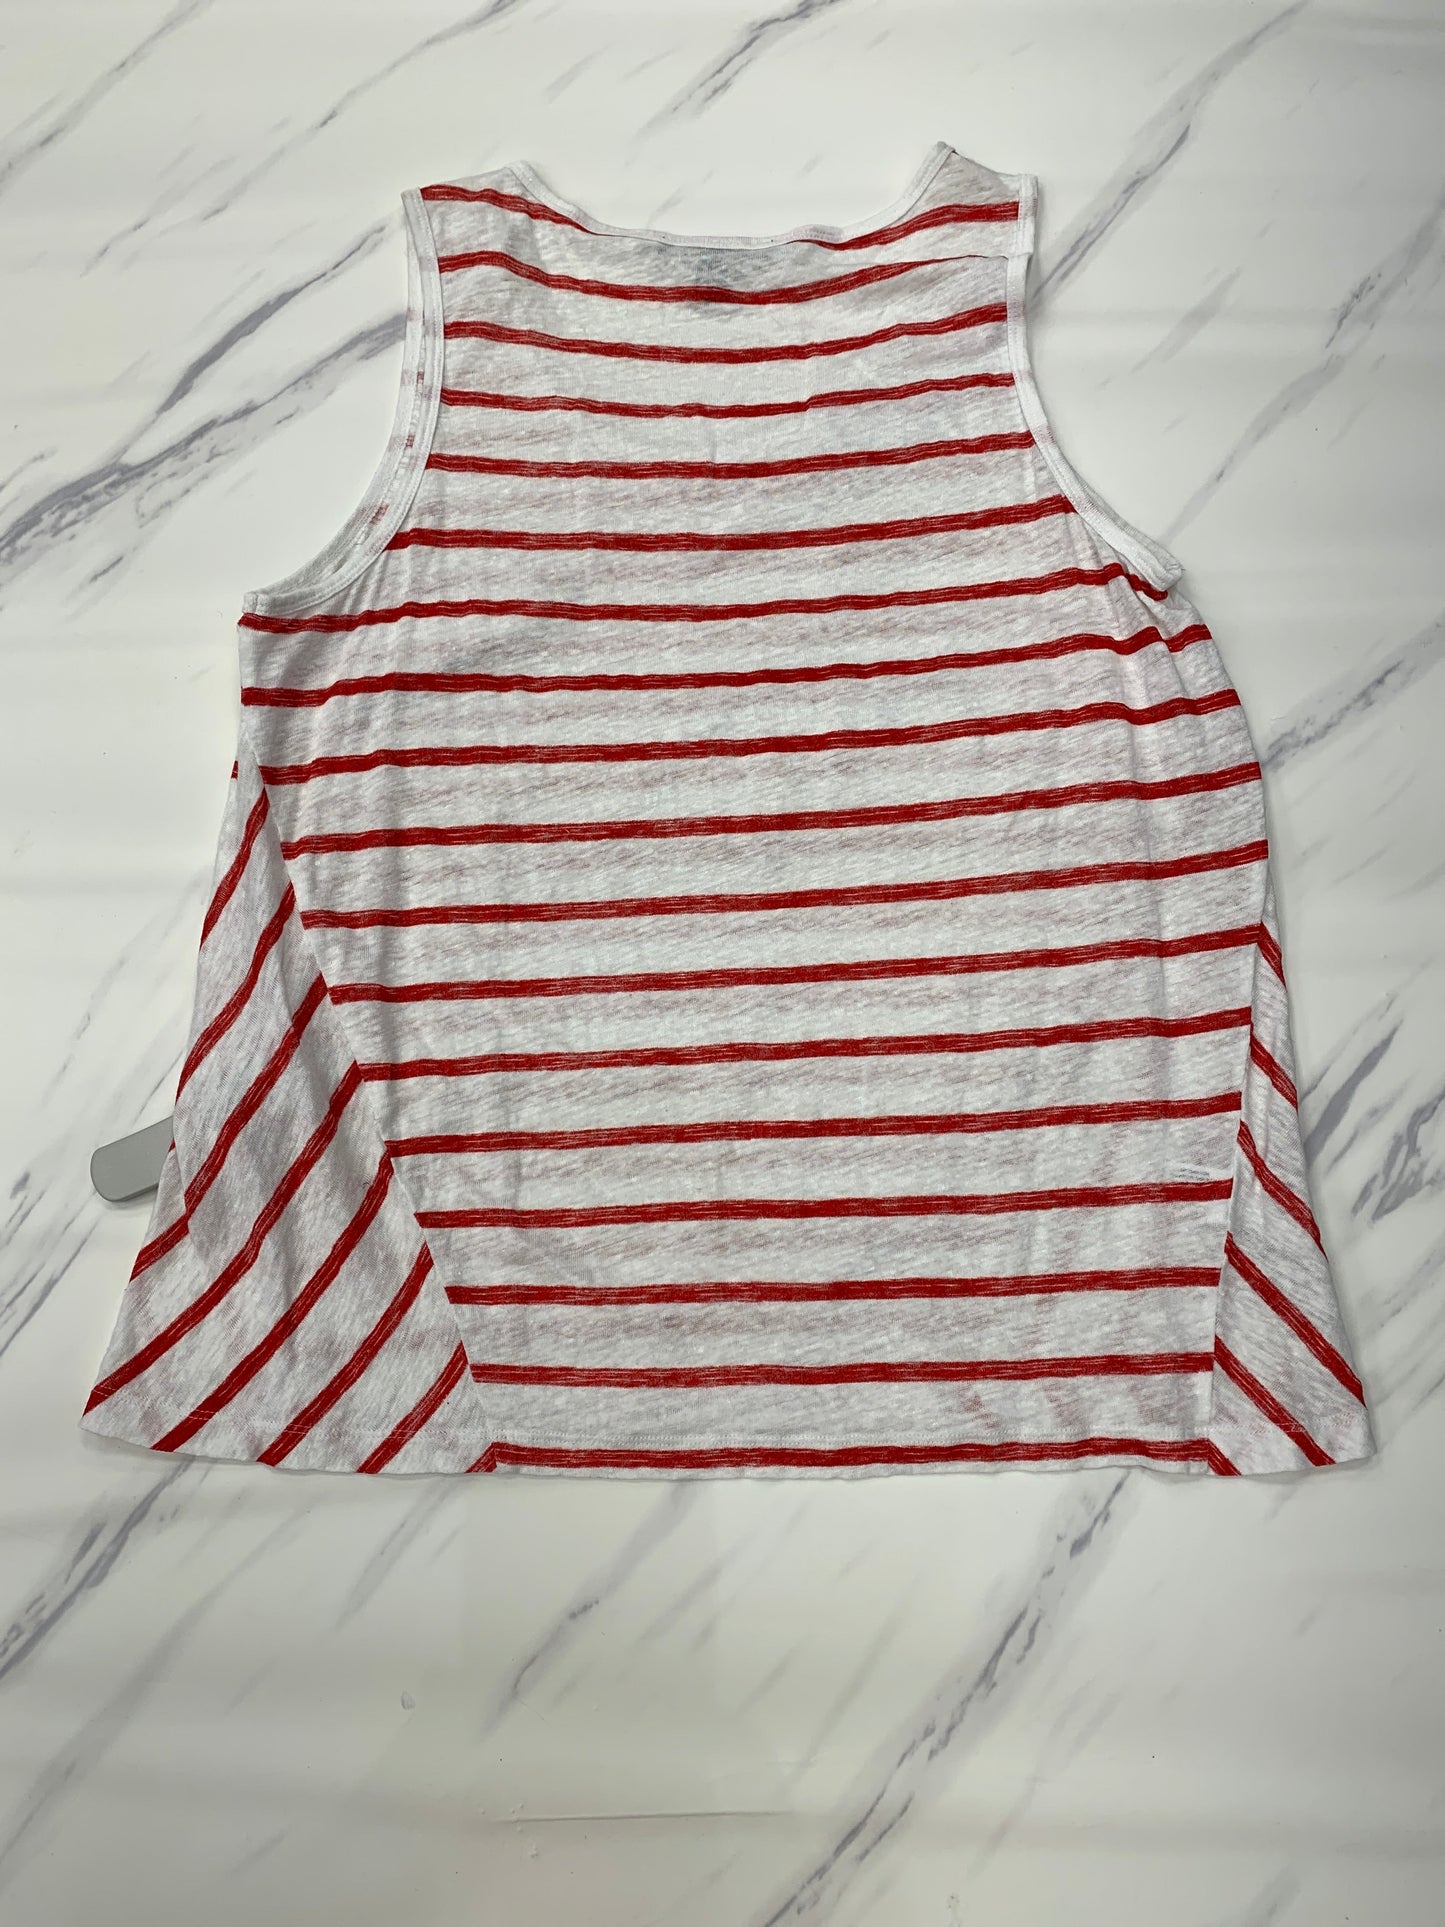 Striped Pattern Top Sleeveless Tommy Bahama, Size Xl